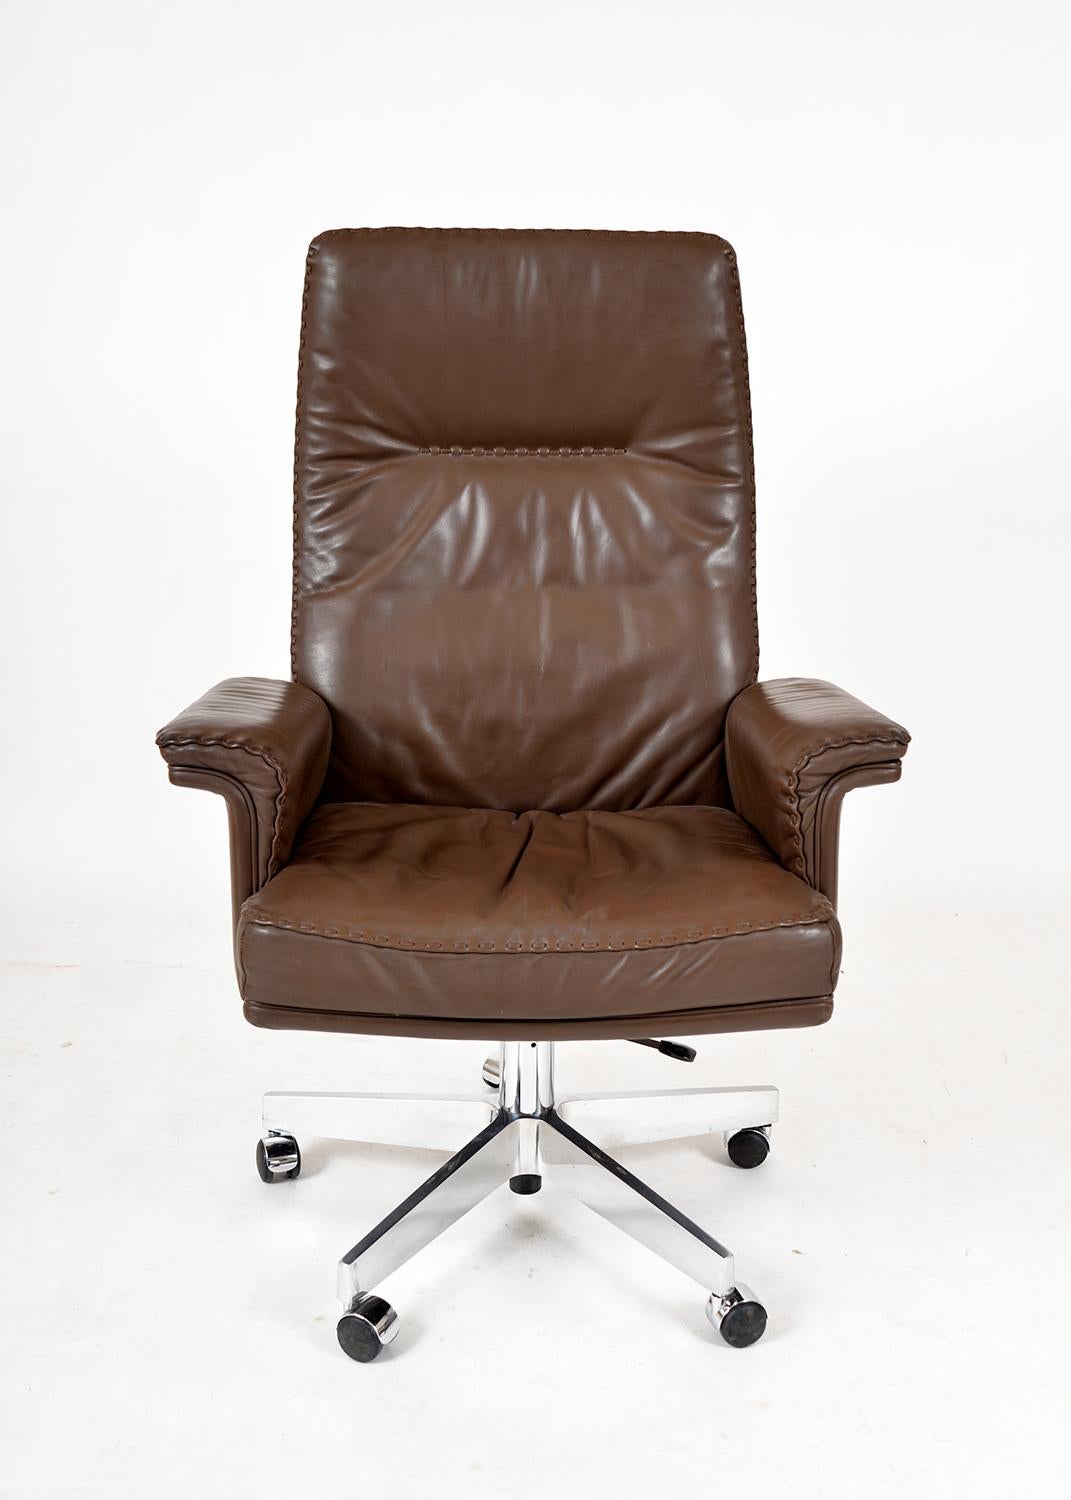 Late 20th Century 1970s Swiss De Sede Ds 35 Executive Swivel Leather Office Chair Armchair Castors